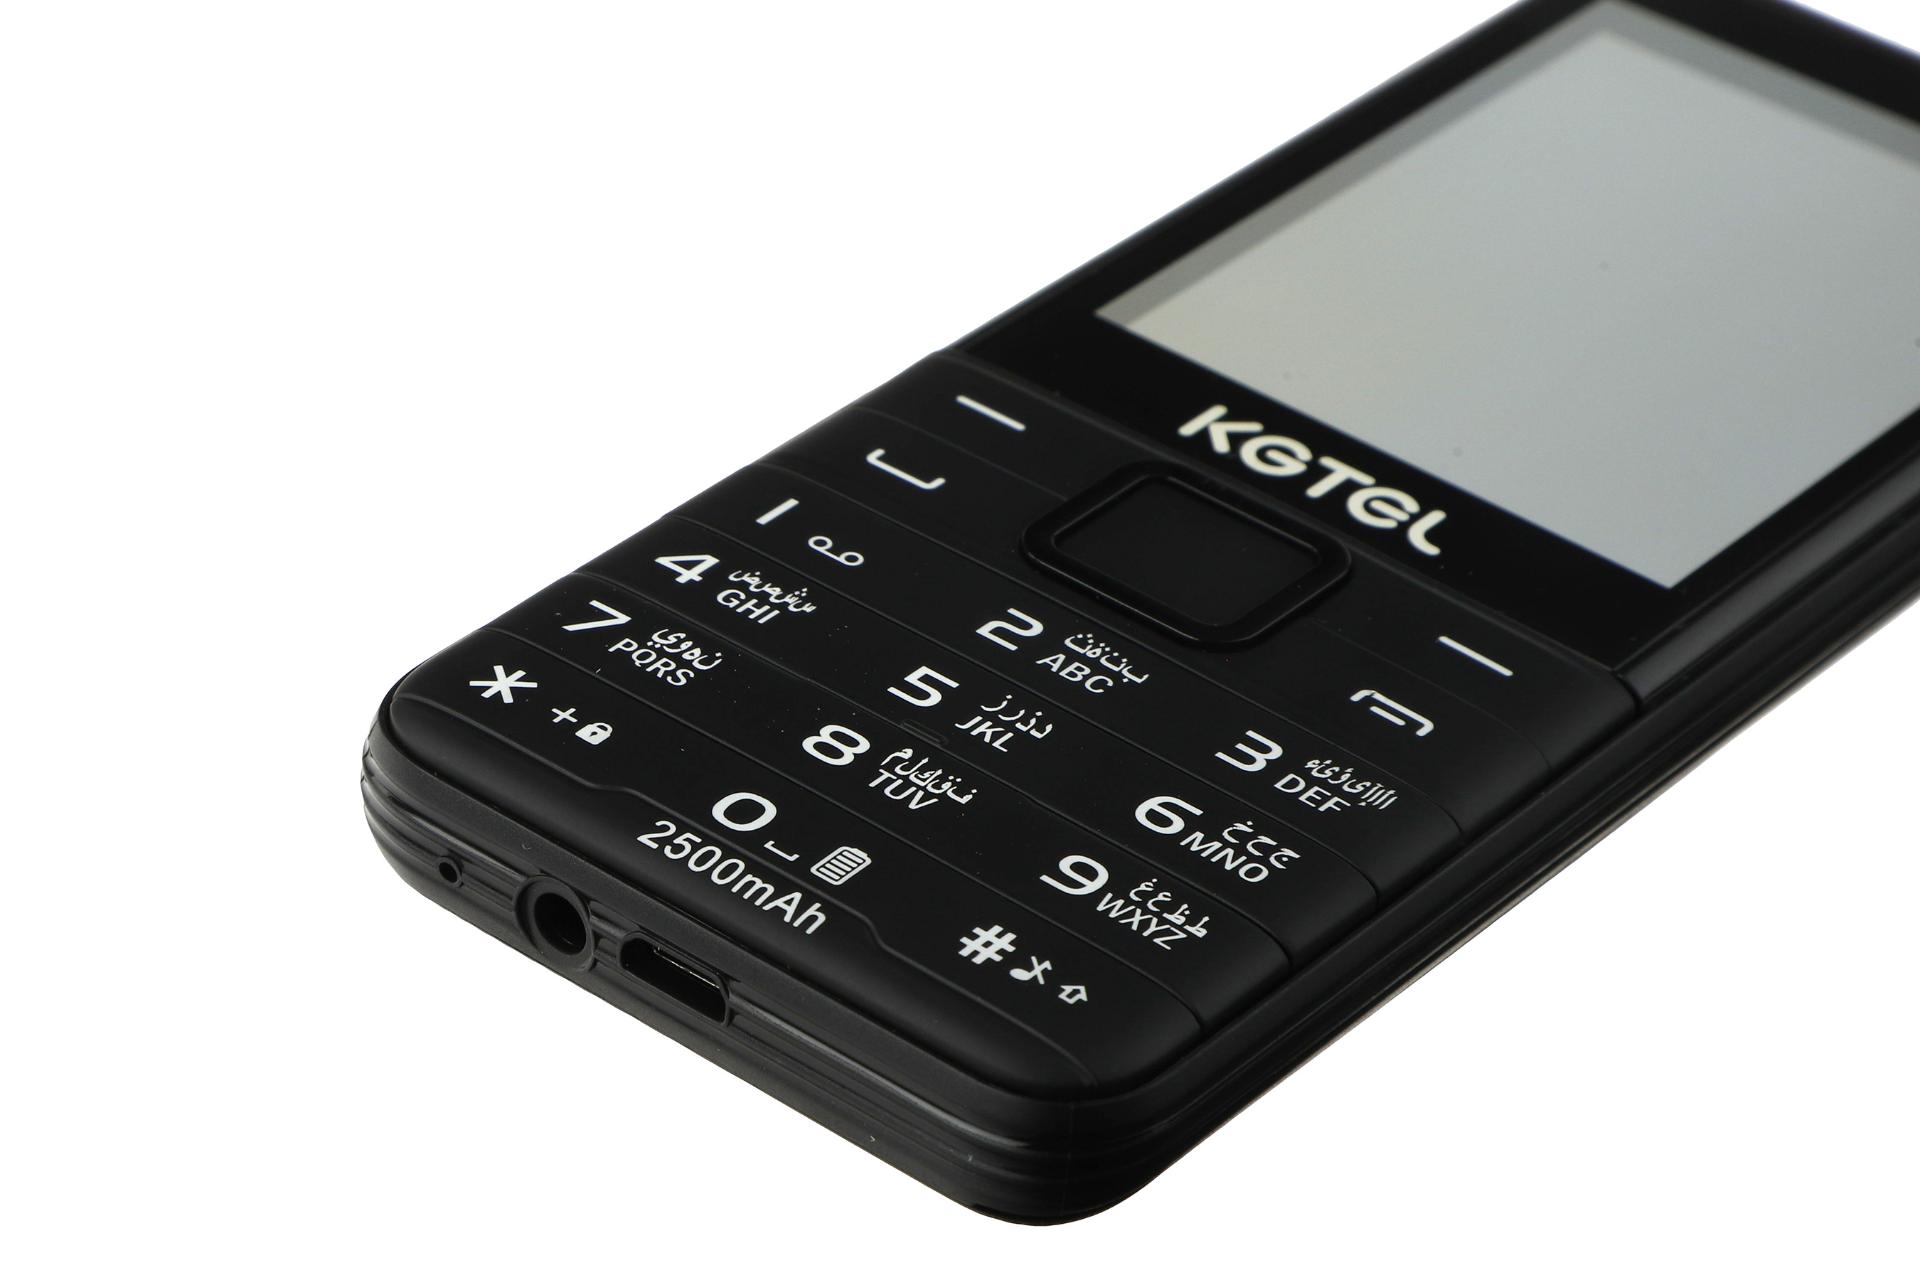 اتصالات گوشی موبایل کاجیتل KGTEL K3100